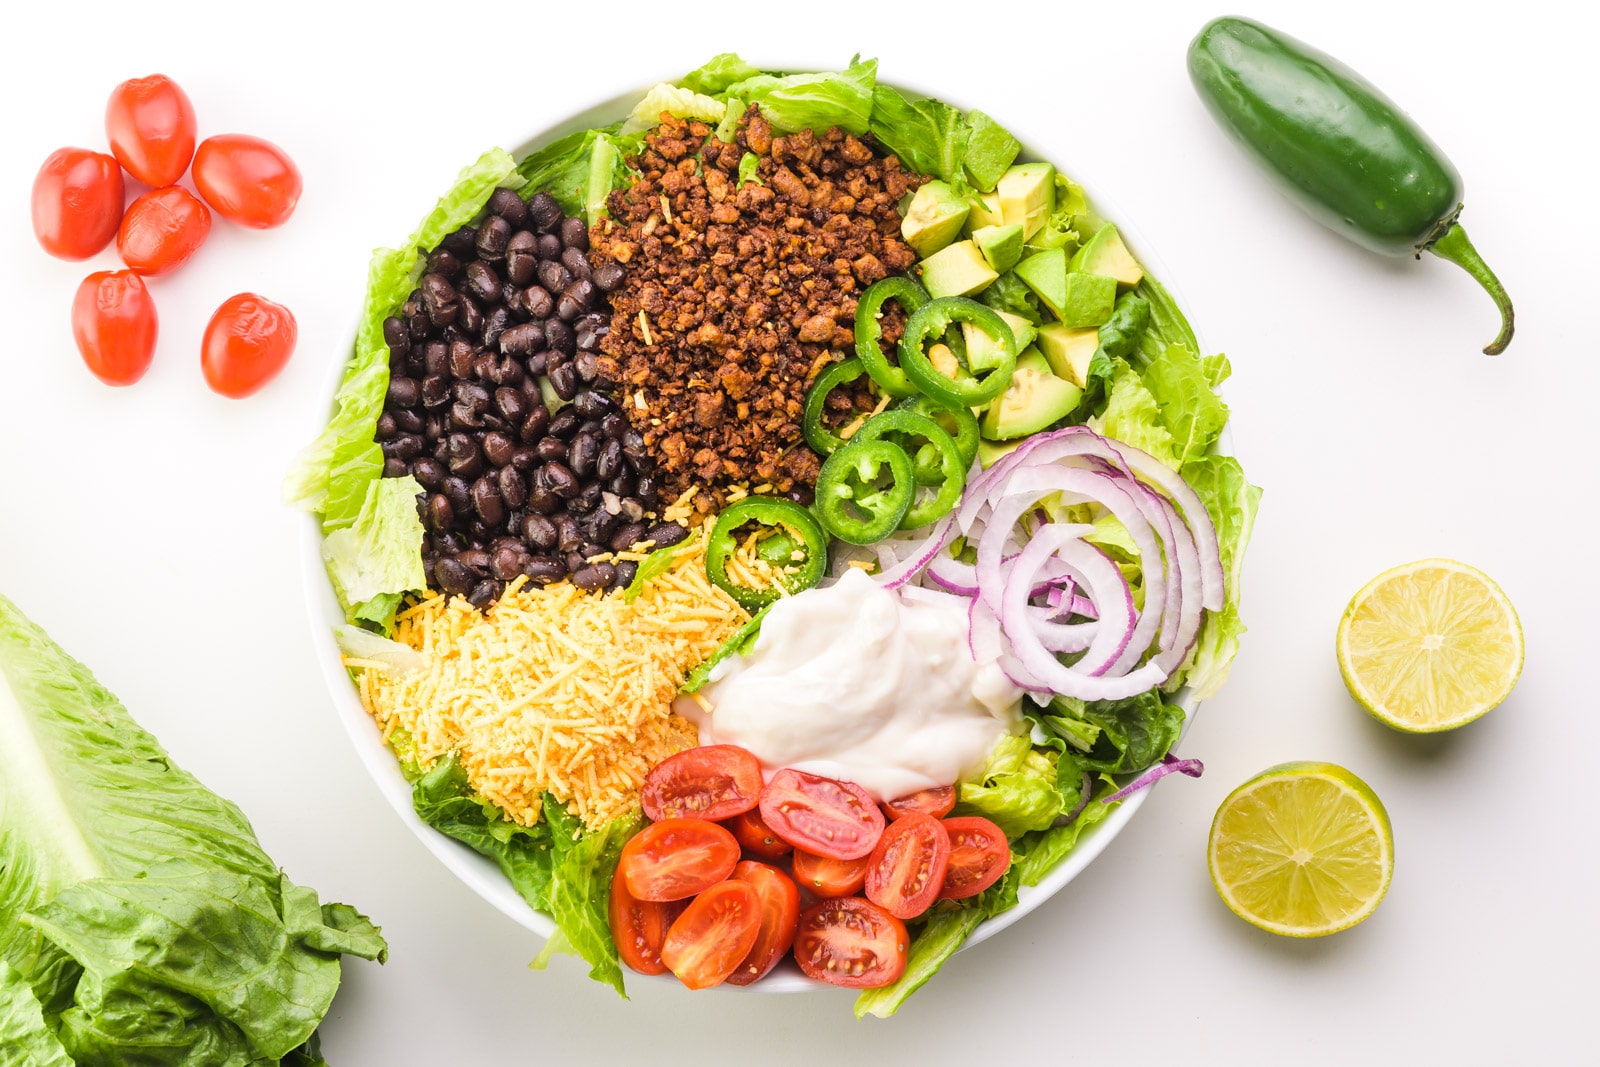 Vegan Taco Salad Recipe by Namely Marly